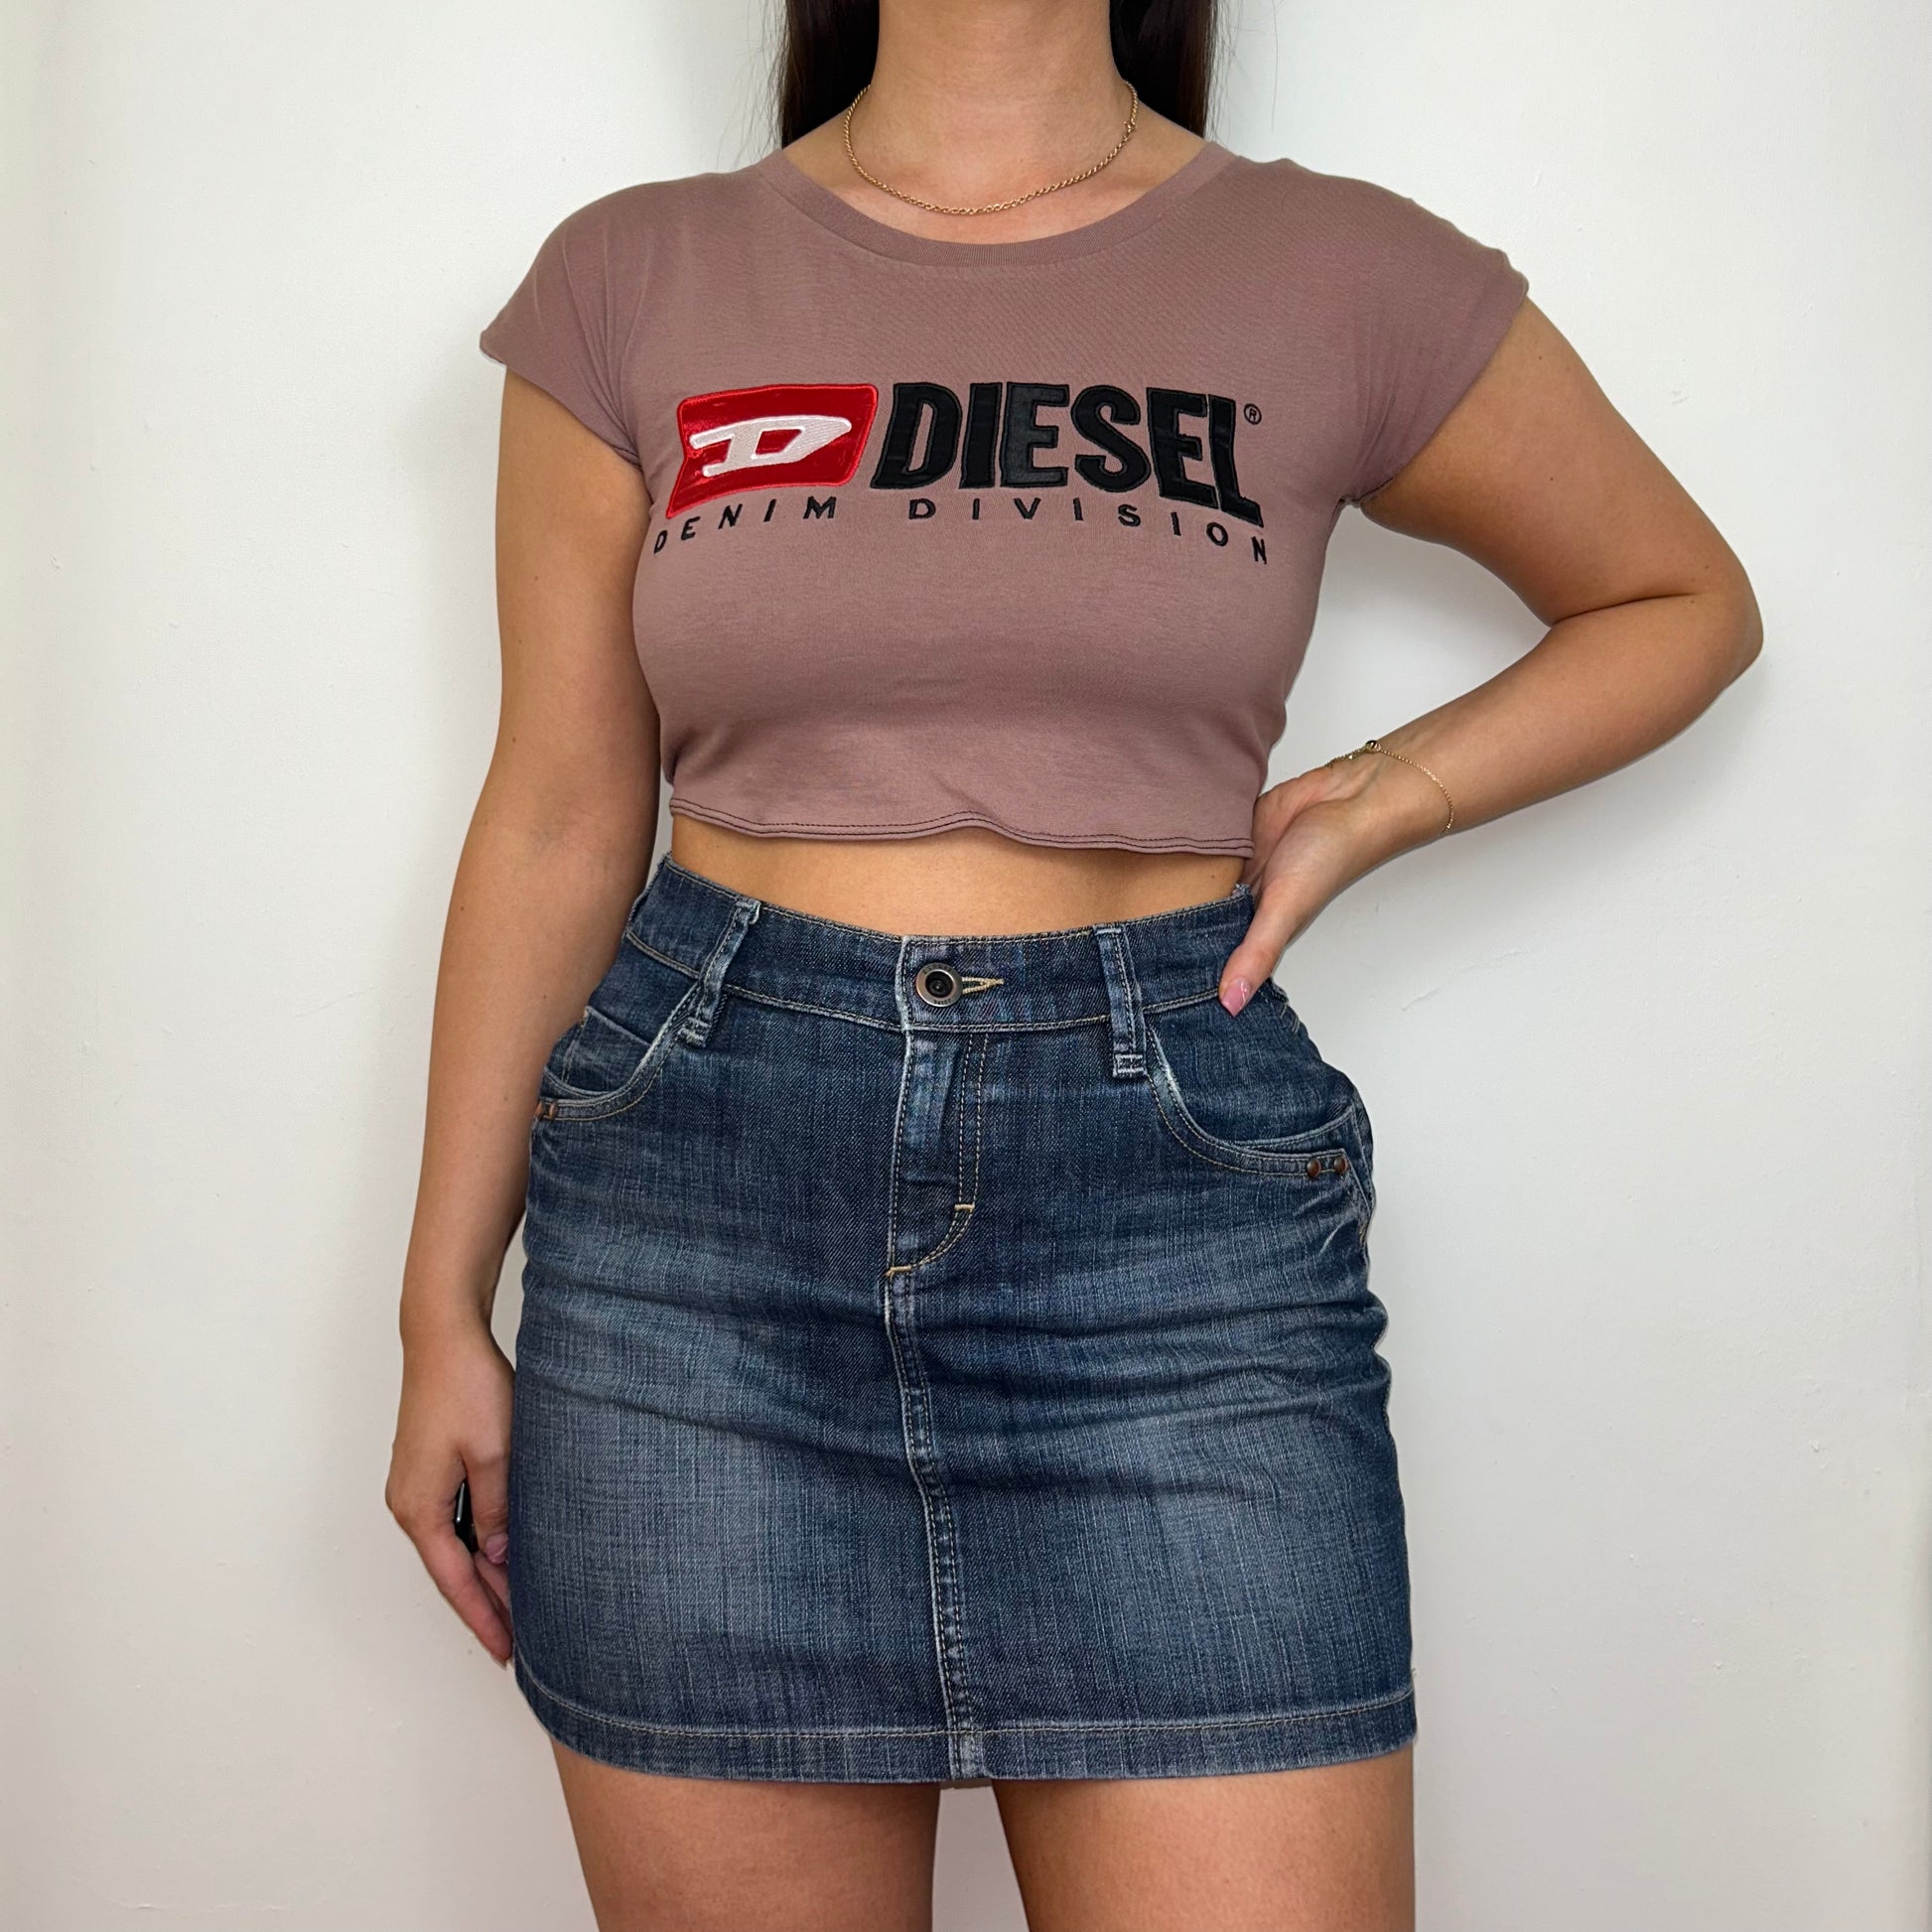 pink short sleeve crop top with black diesel logo shown on a model wearing a denim skirt